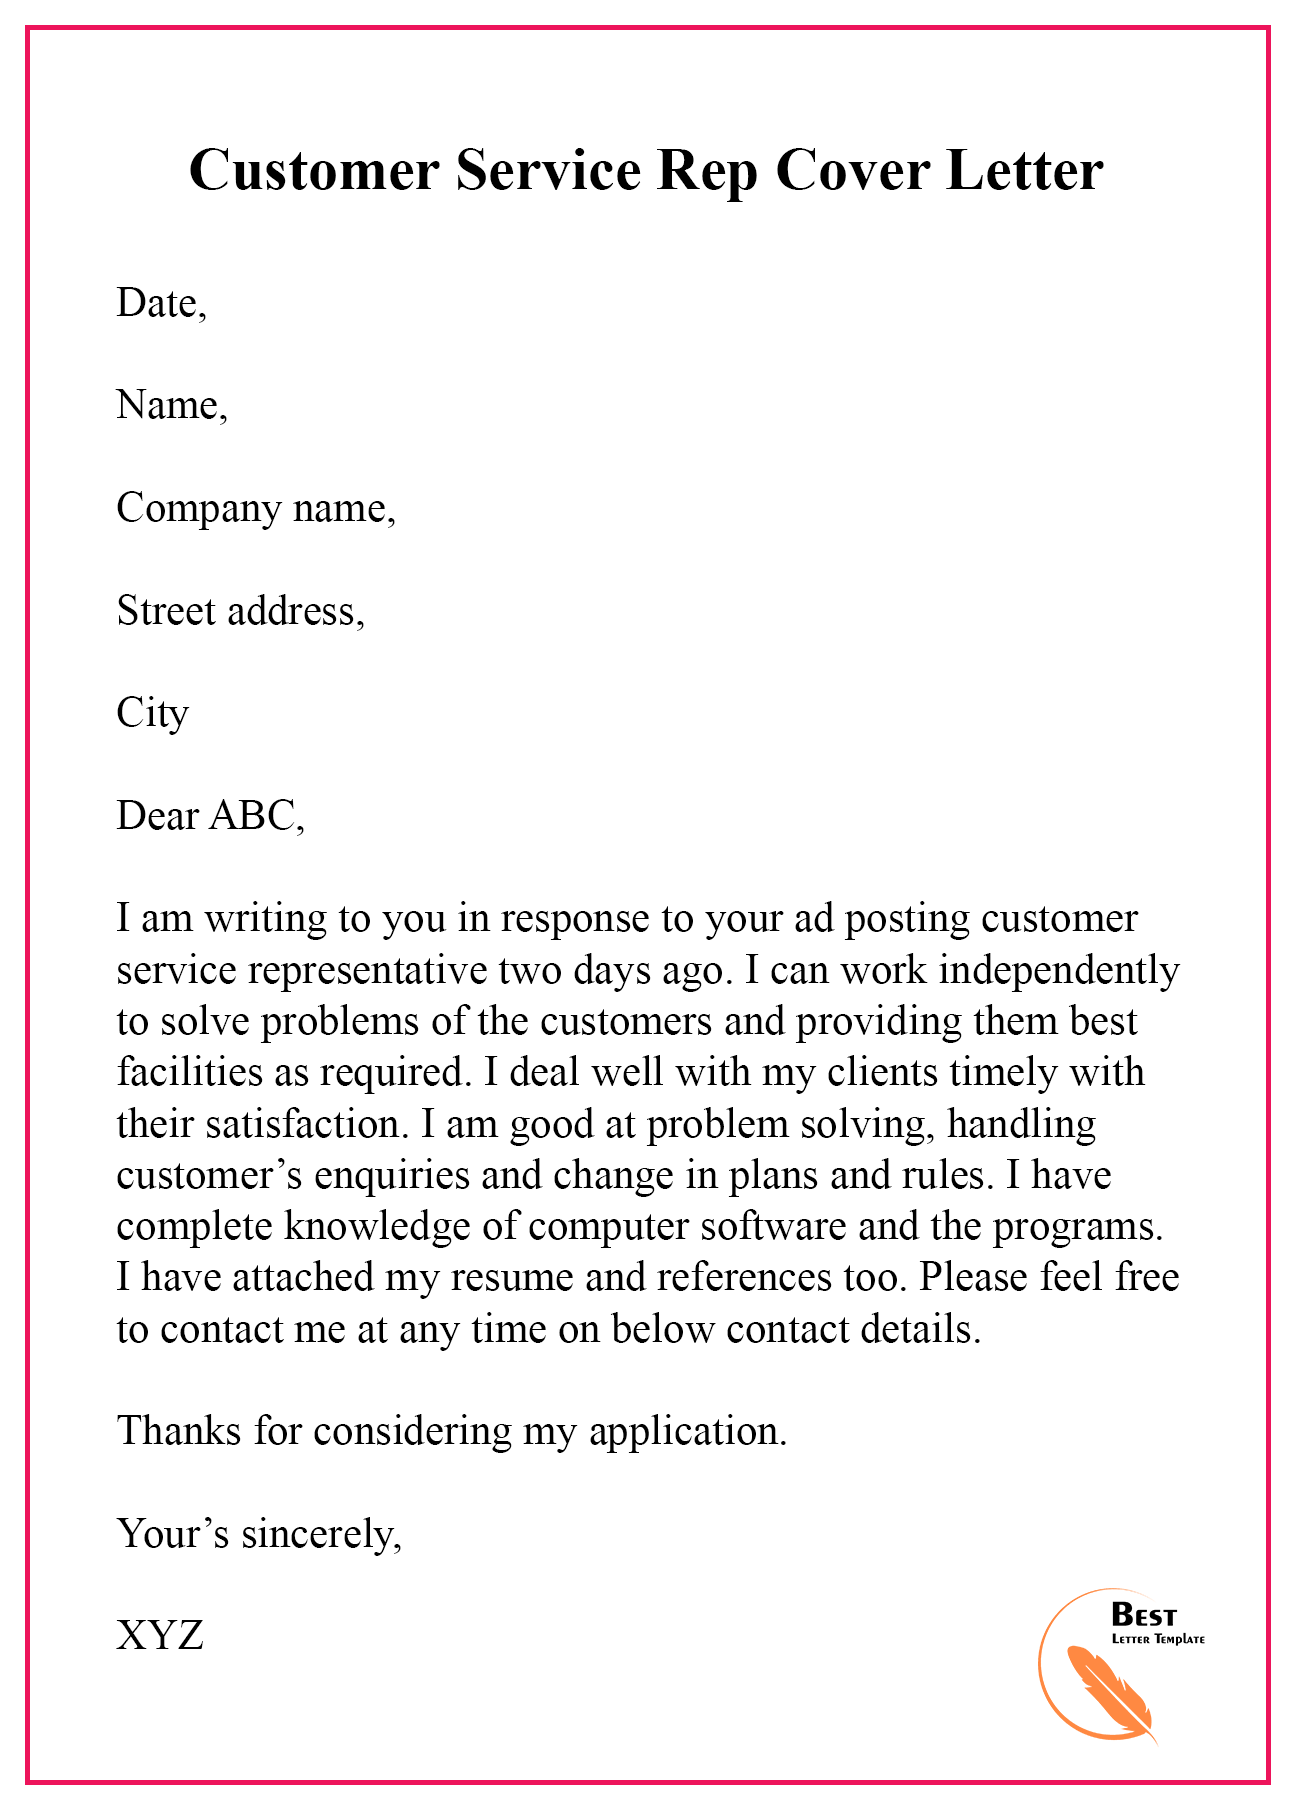 customer service cover letter 2022